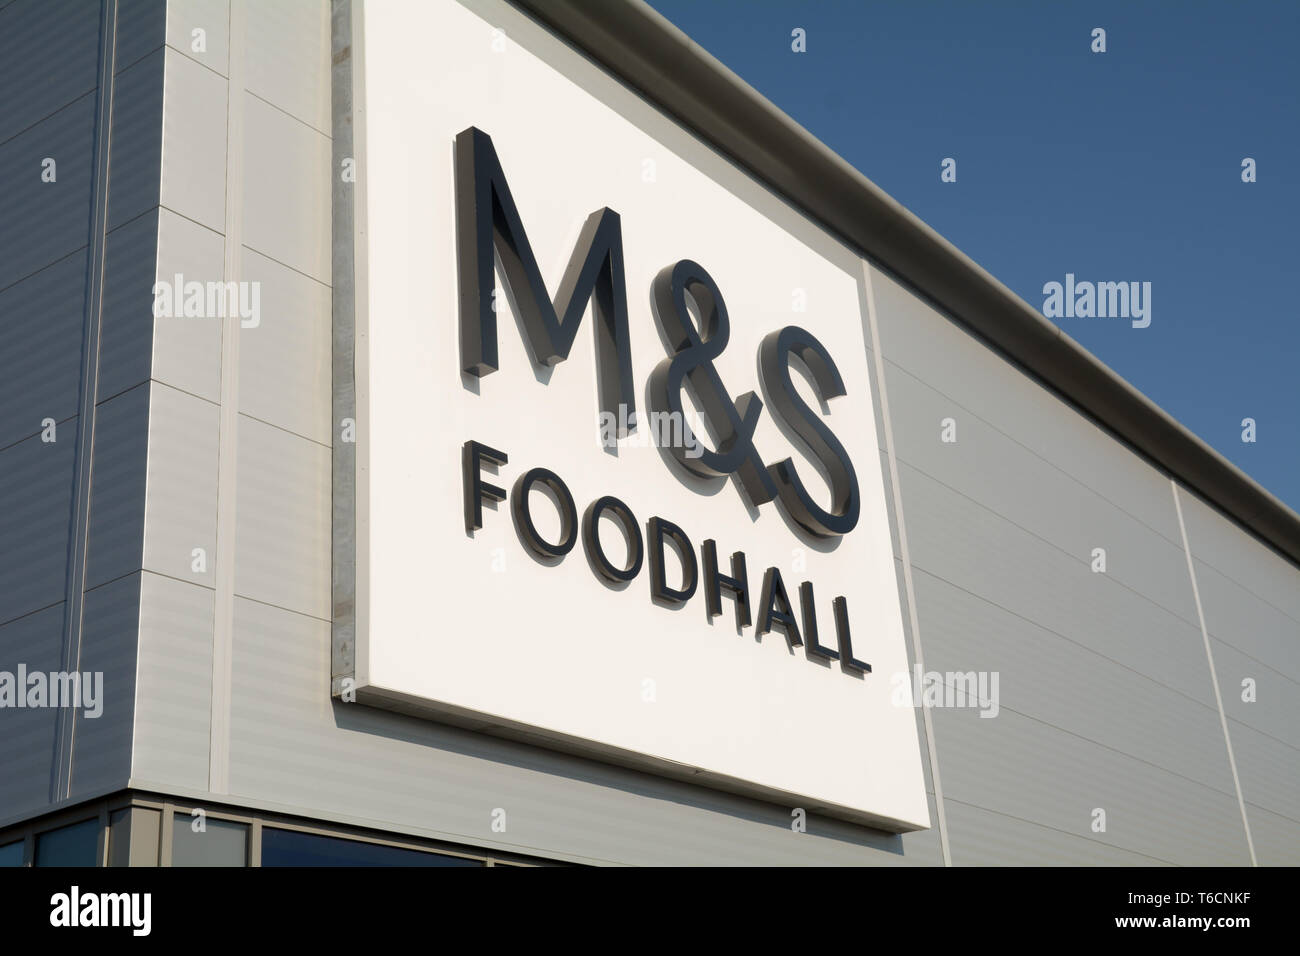 M&S Foodhall sign Stock Photo